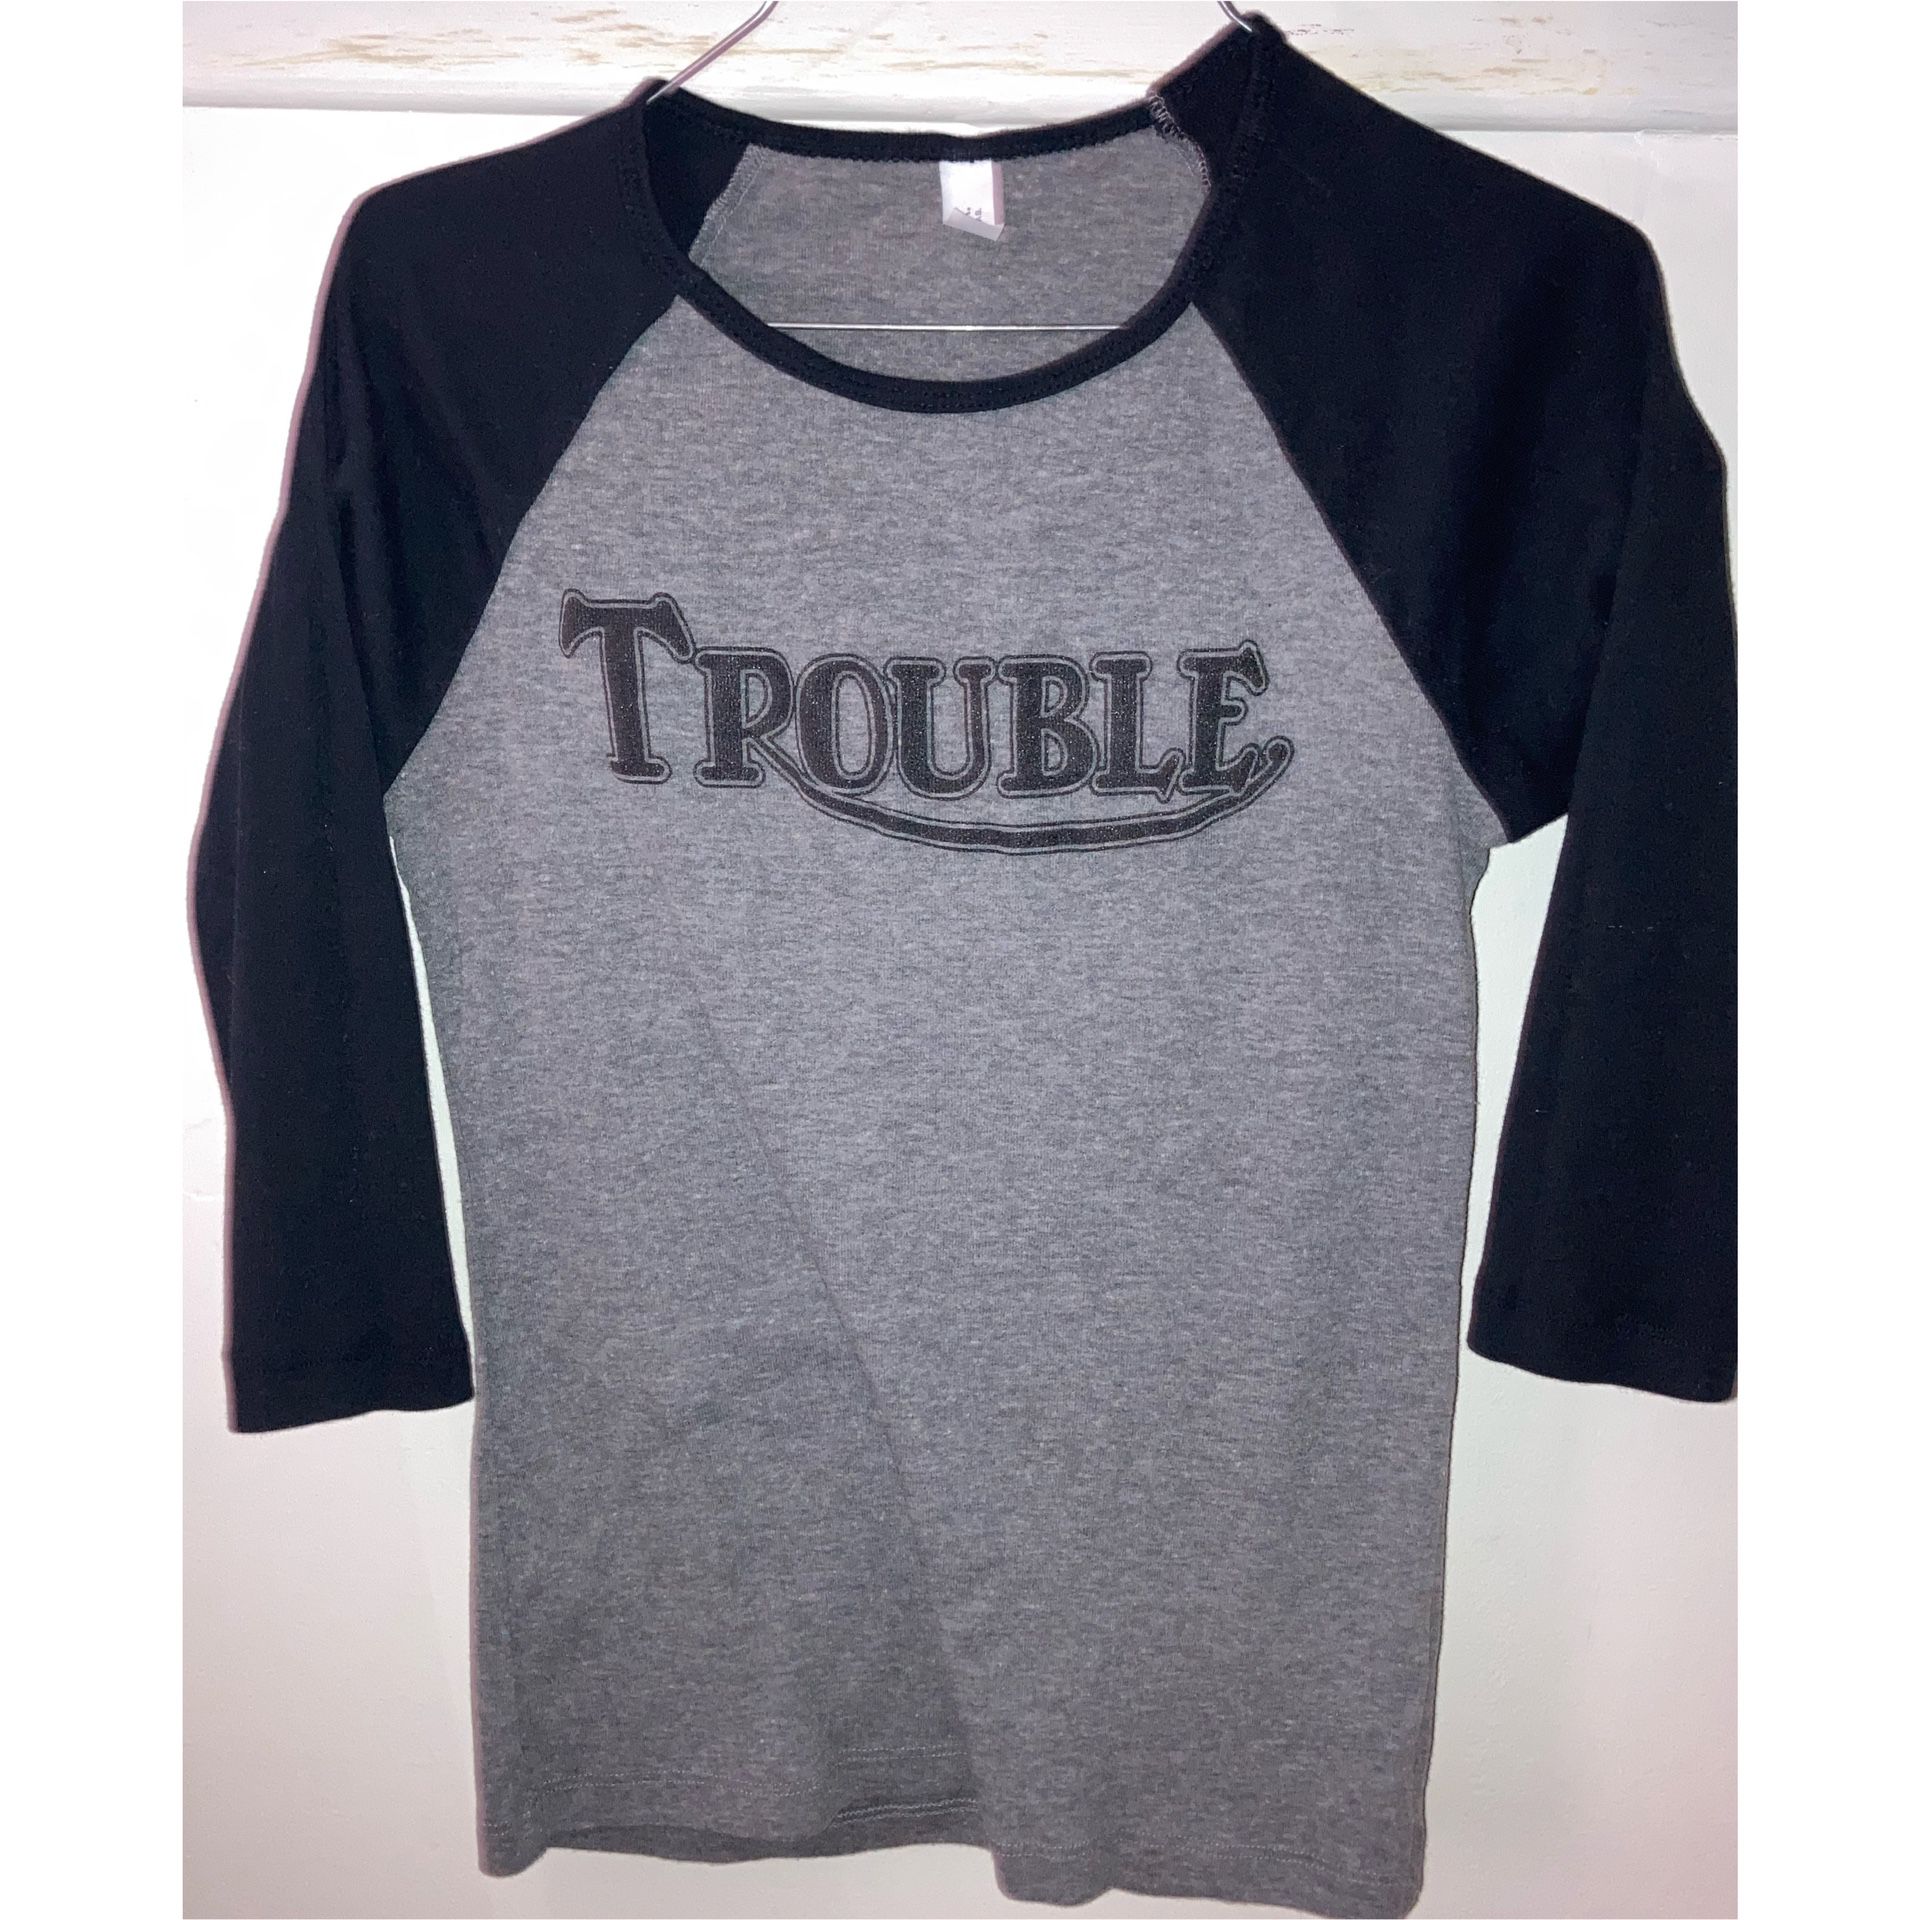 Trouble Size S Grey/Black Baseball Tee